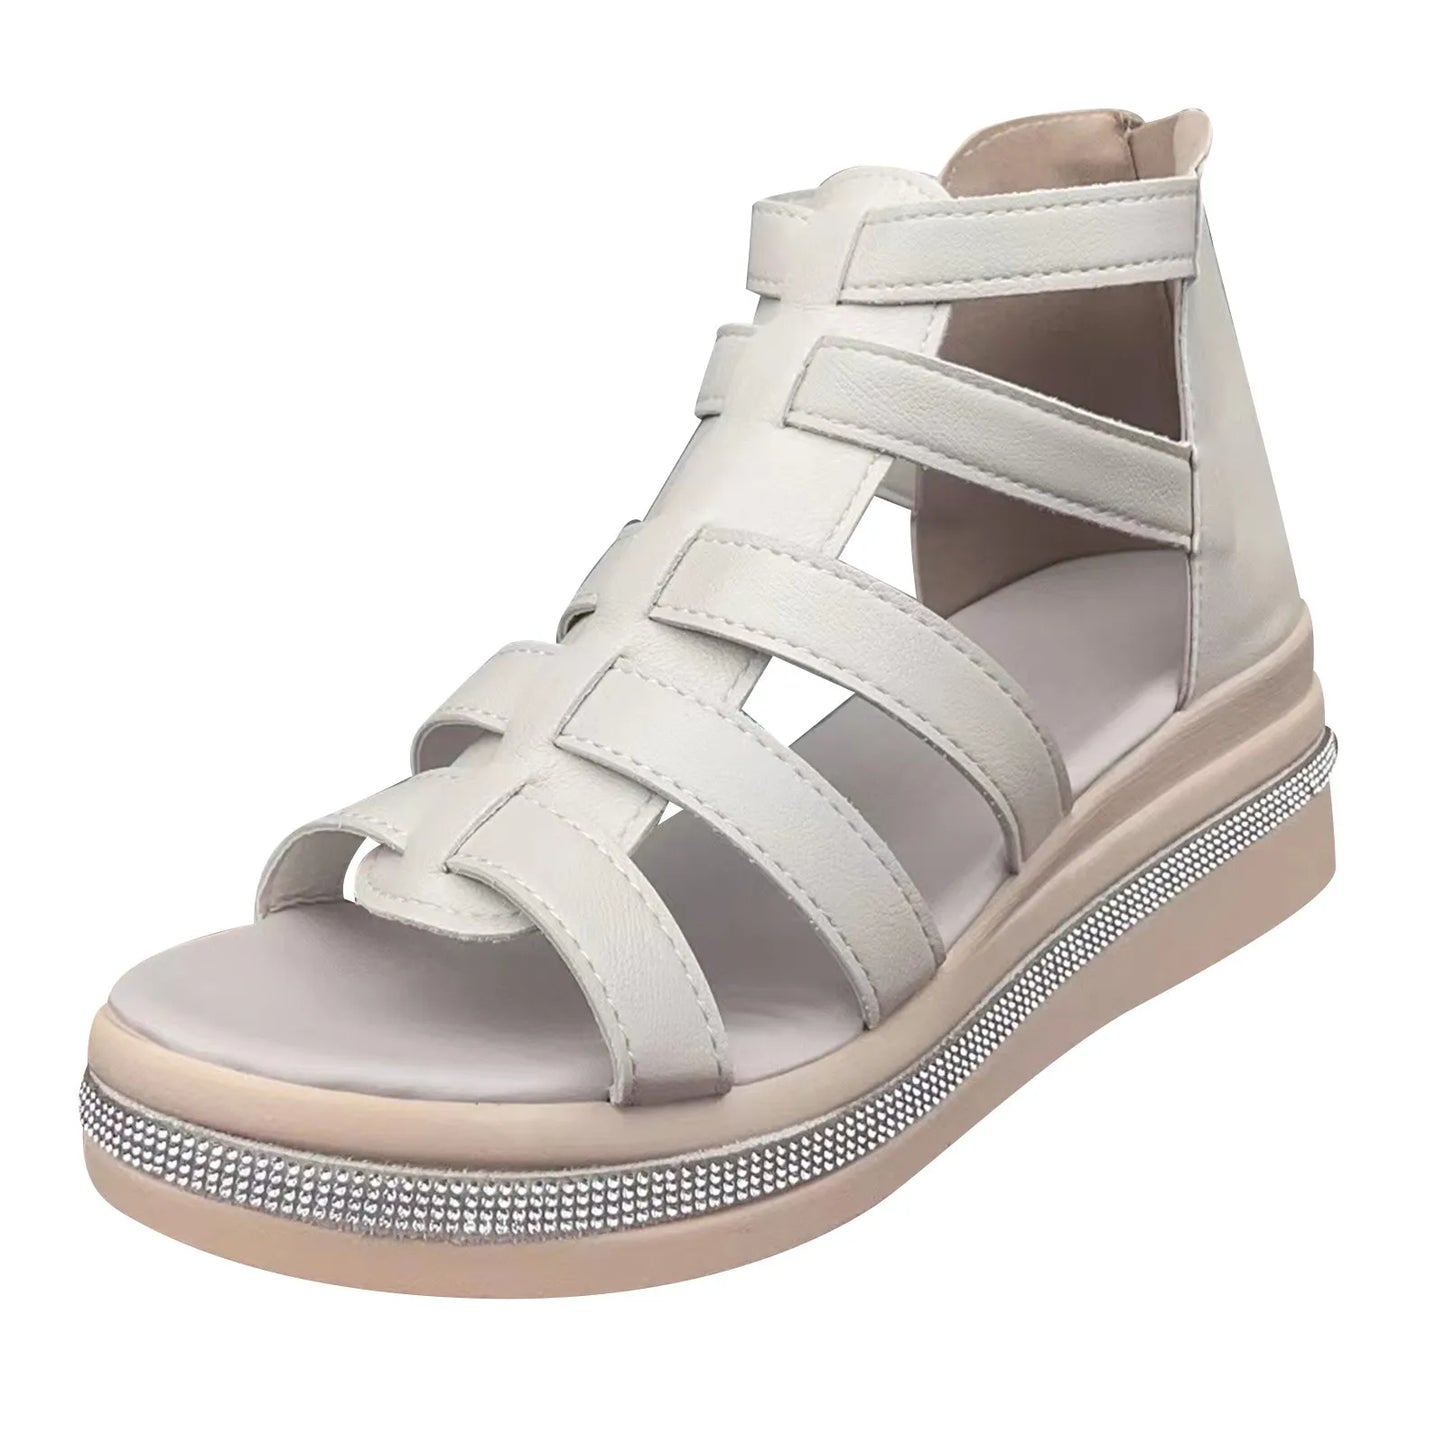 Shoes For Women Sandals Comfortable Wide Platform Sandals Women/Open Toe Ankle Strap Glitter Sandals For Women